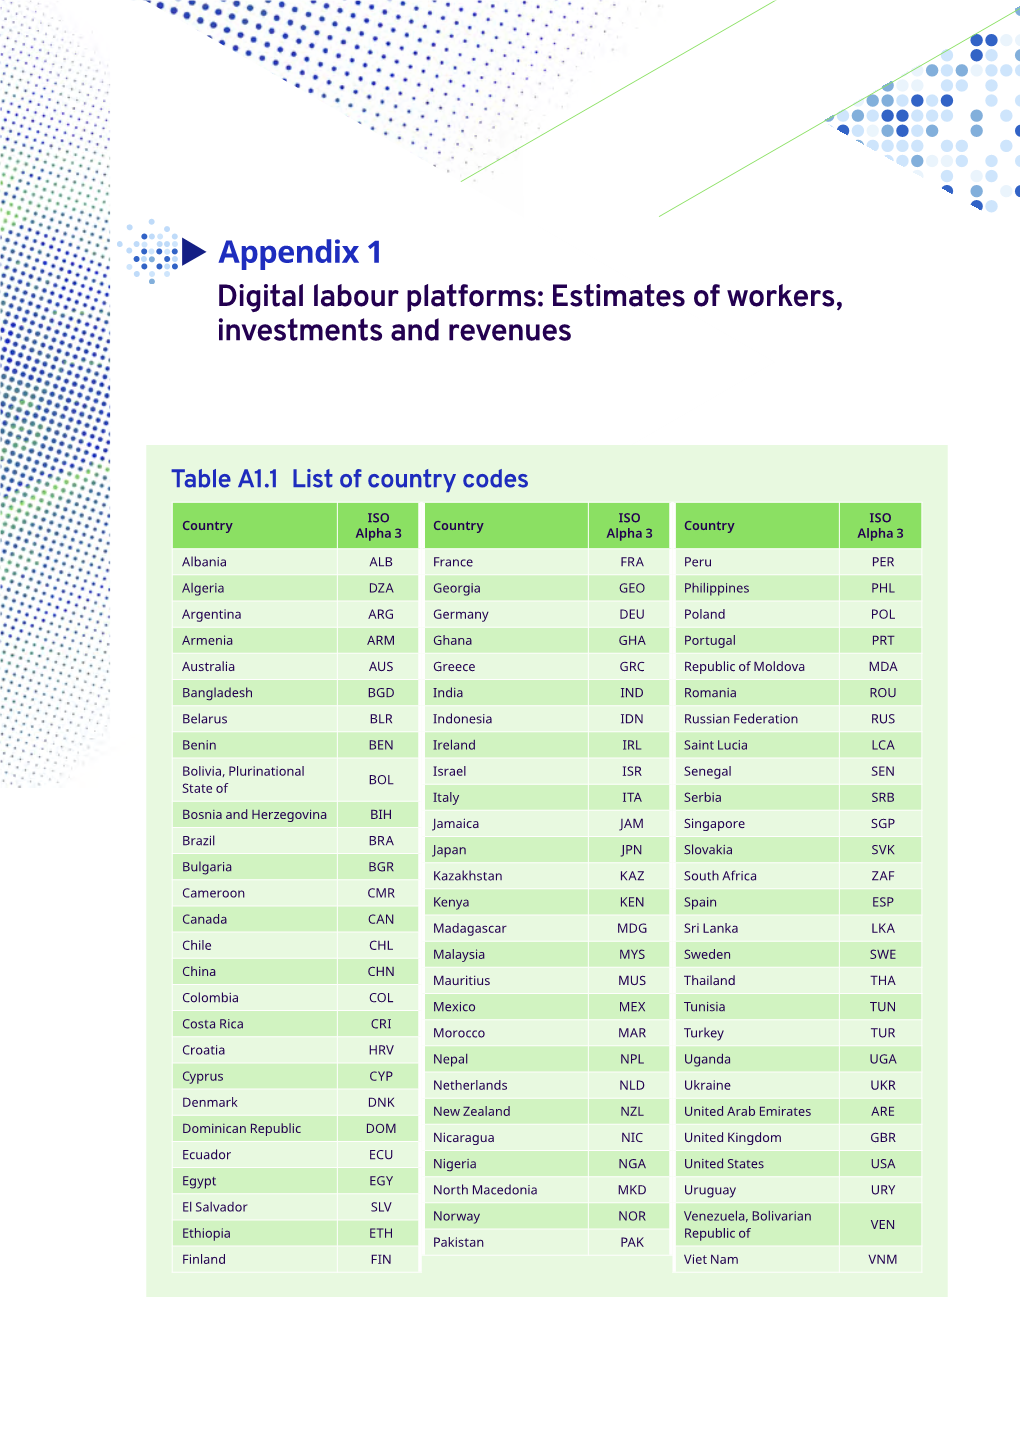 Appendix 1 Digital Labour Platforms: Estimates of Workers, Investments and Revenues